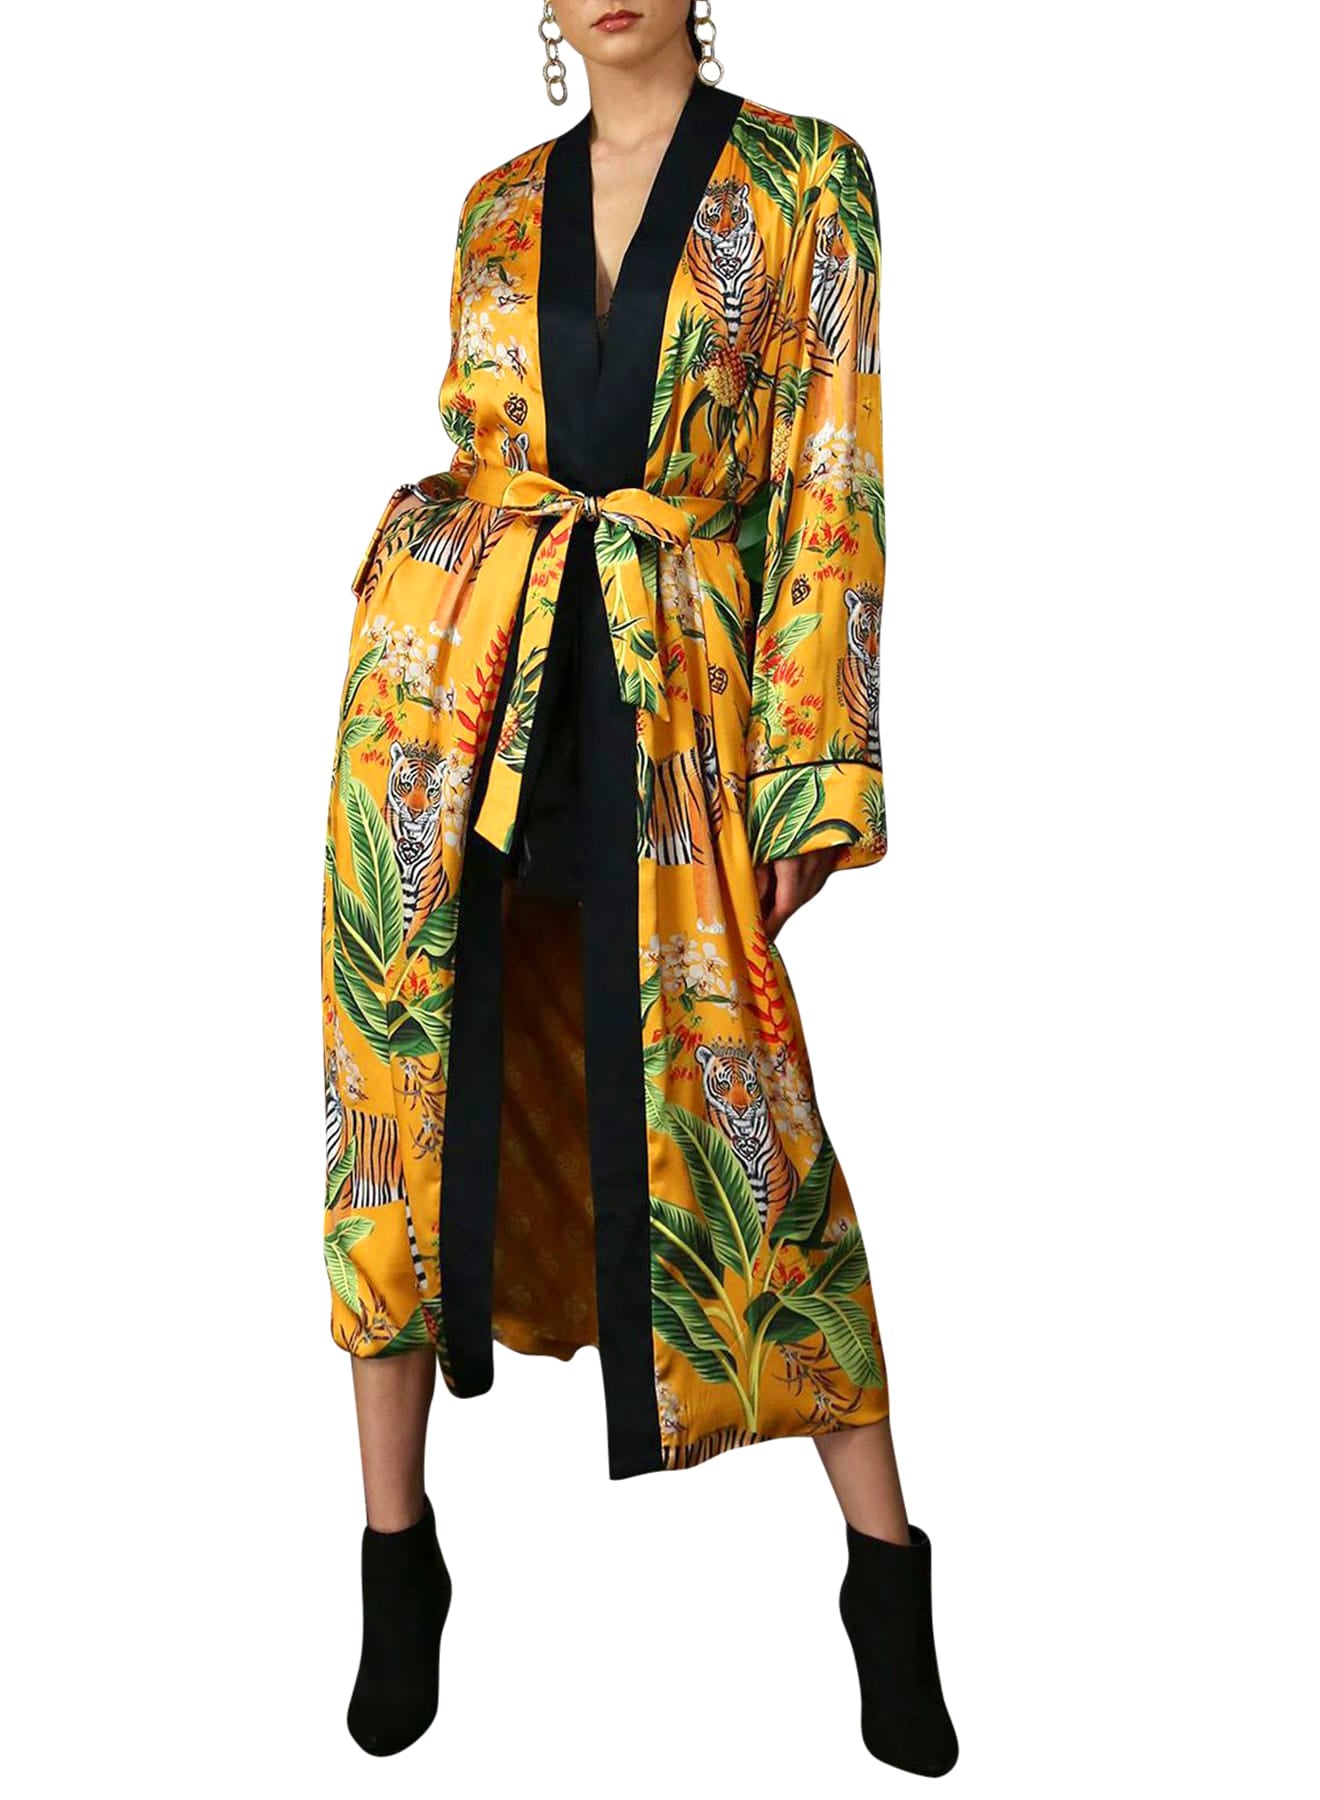 "Kyle X Shahida" "sexy silk robe" "womens kimono robes" "kimono silk robes for women" "womens long silk robe"